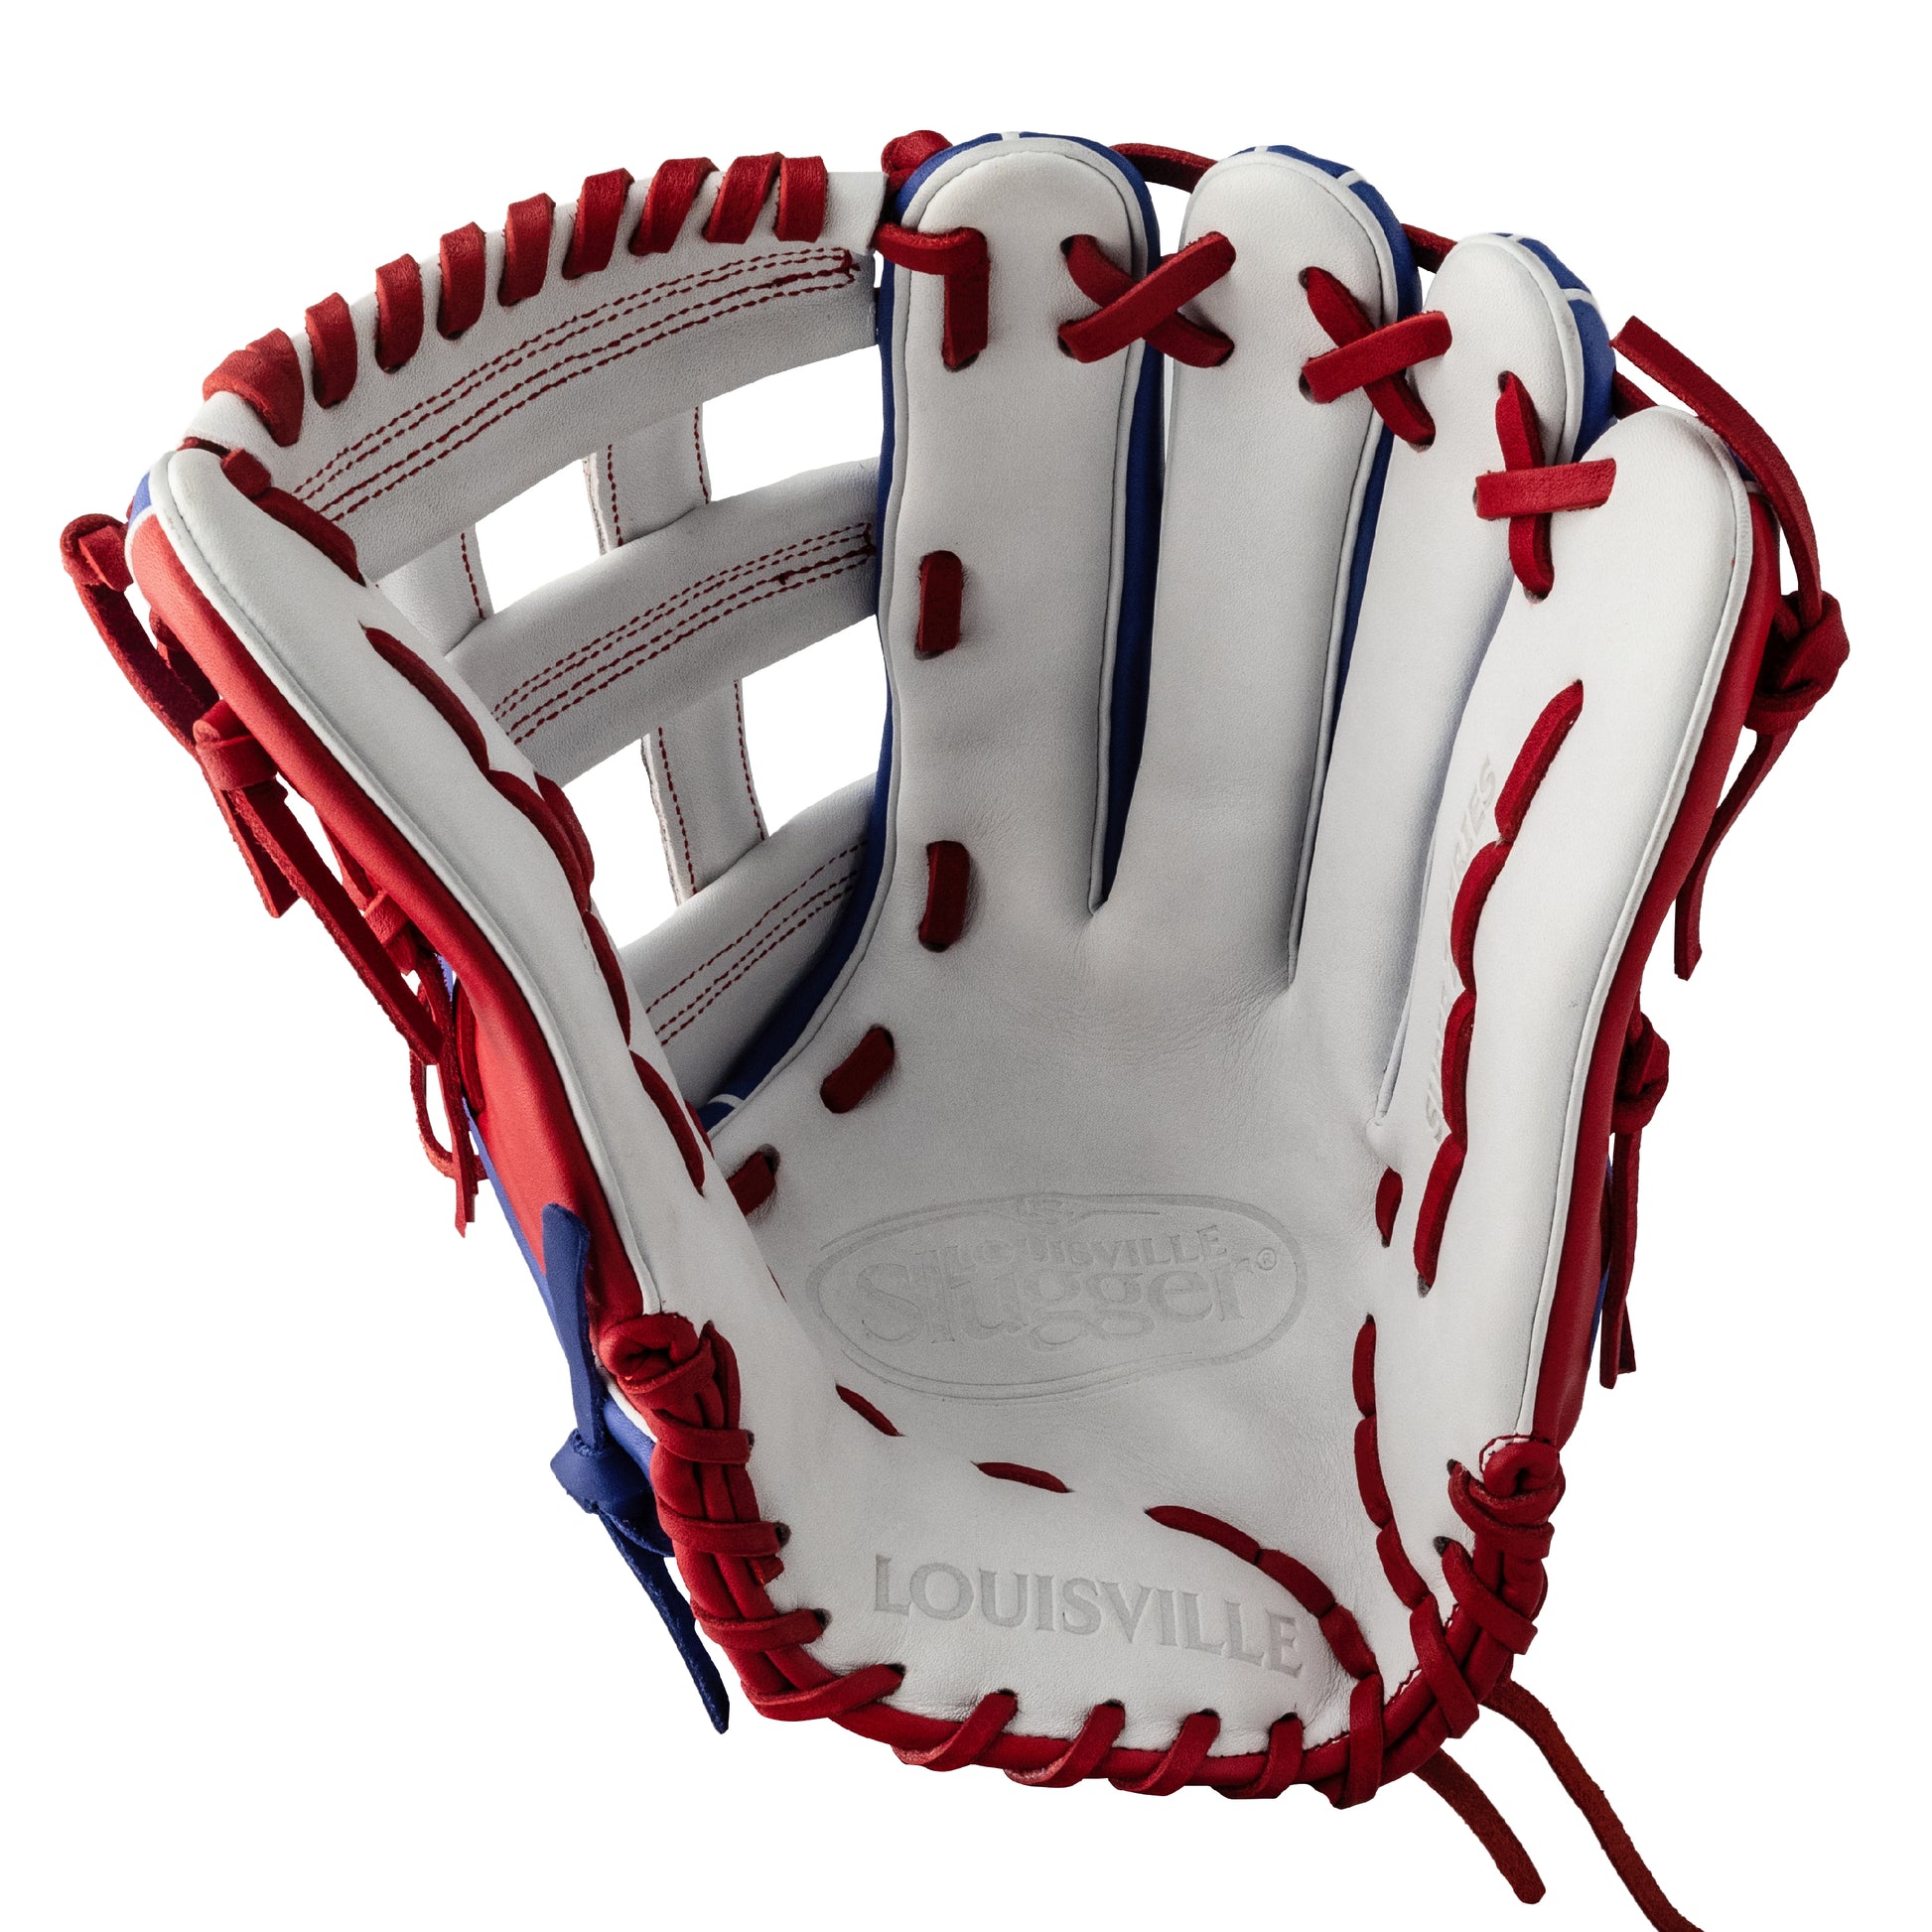 Super Z Slowpitch Fielding Glove 24 - White - Royal - Red (8255297650927)